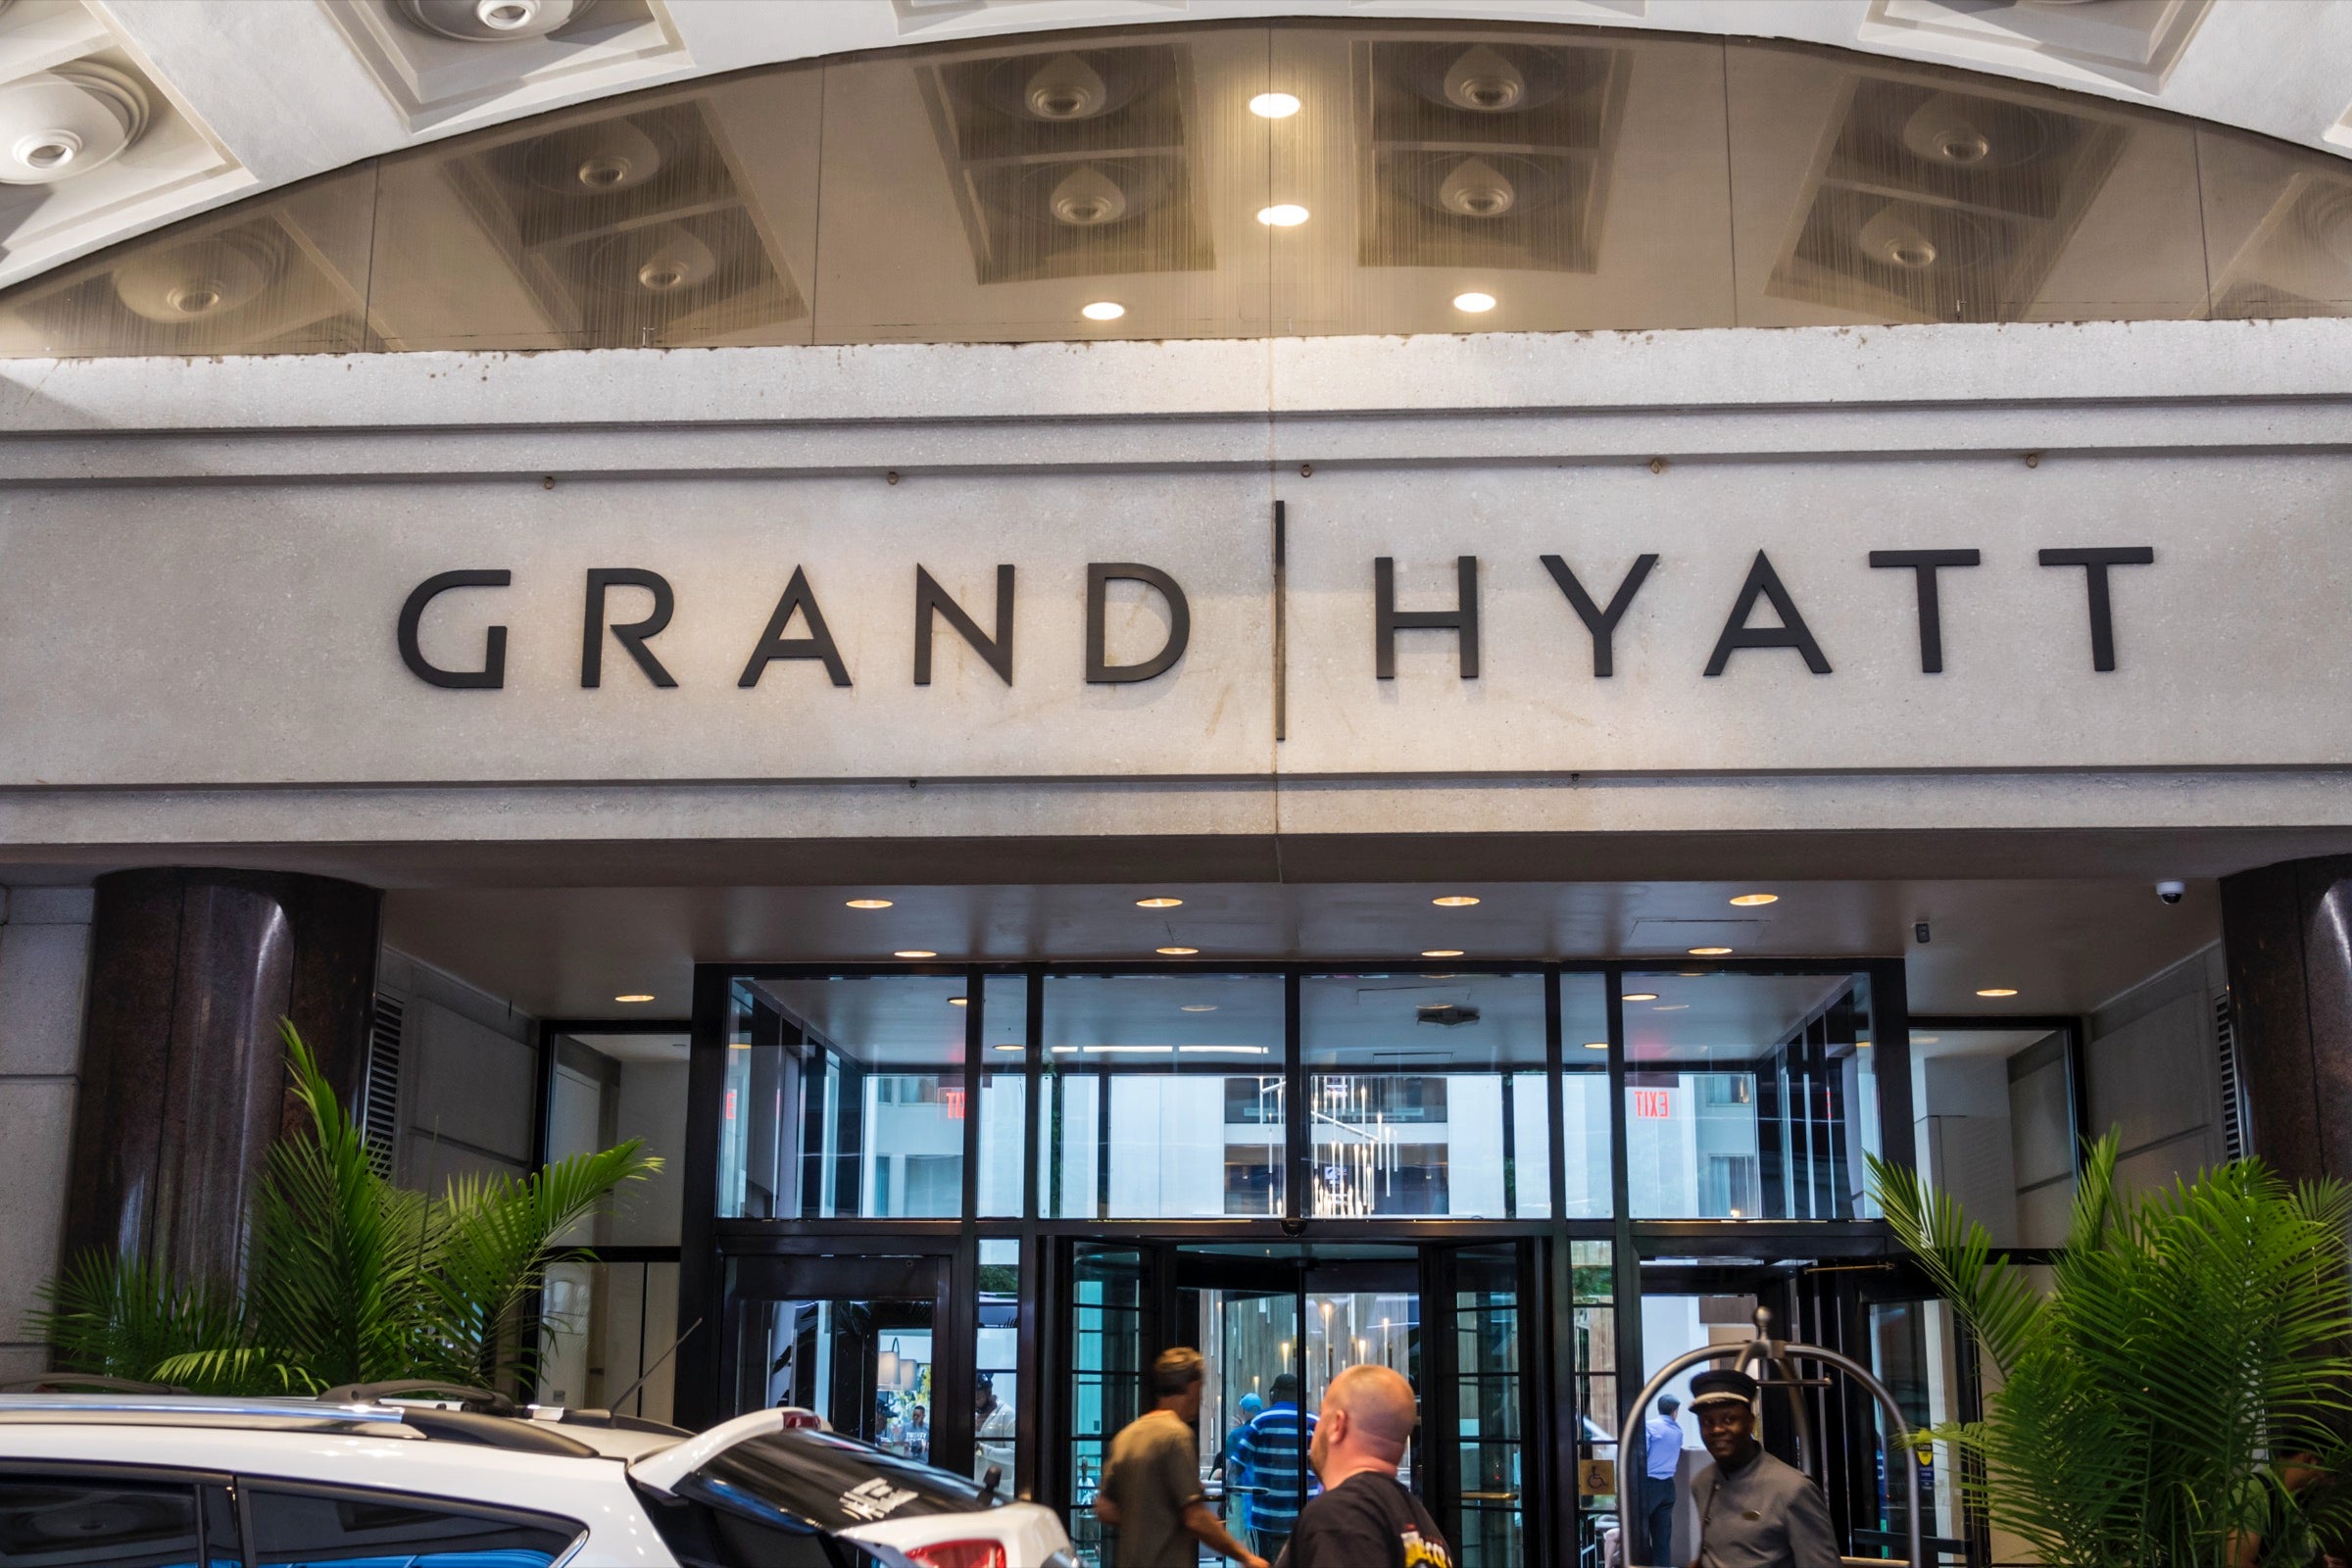 Grand Hyatt Washington DC entrance